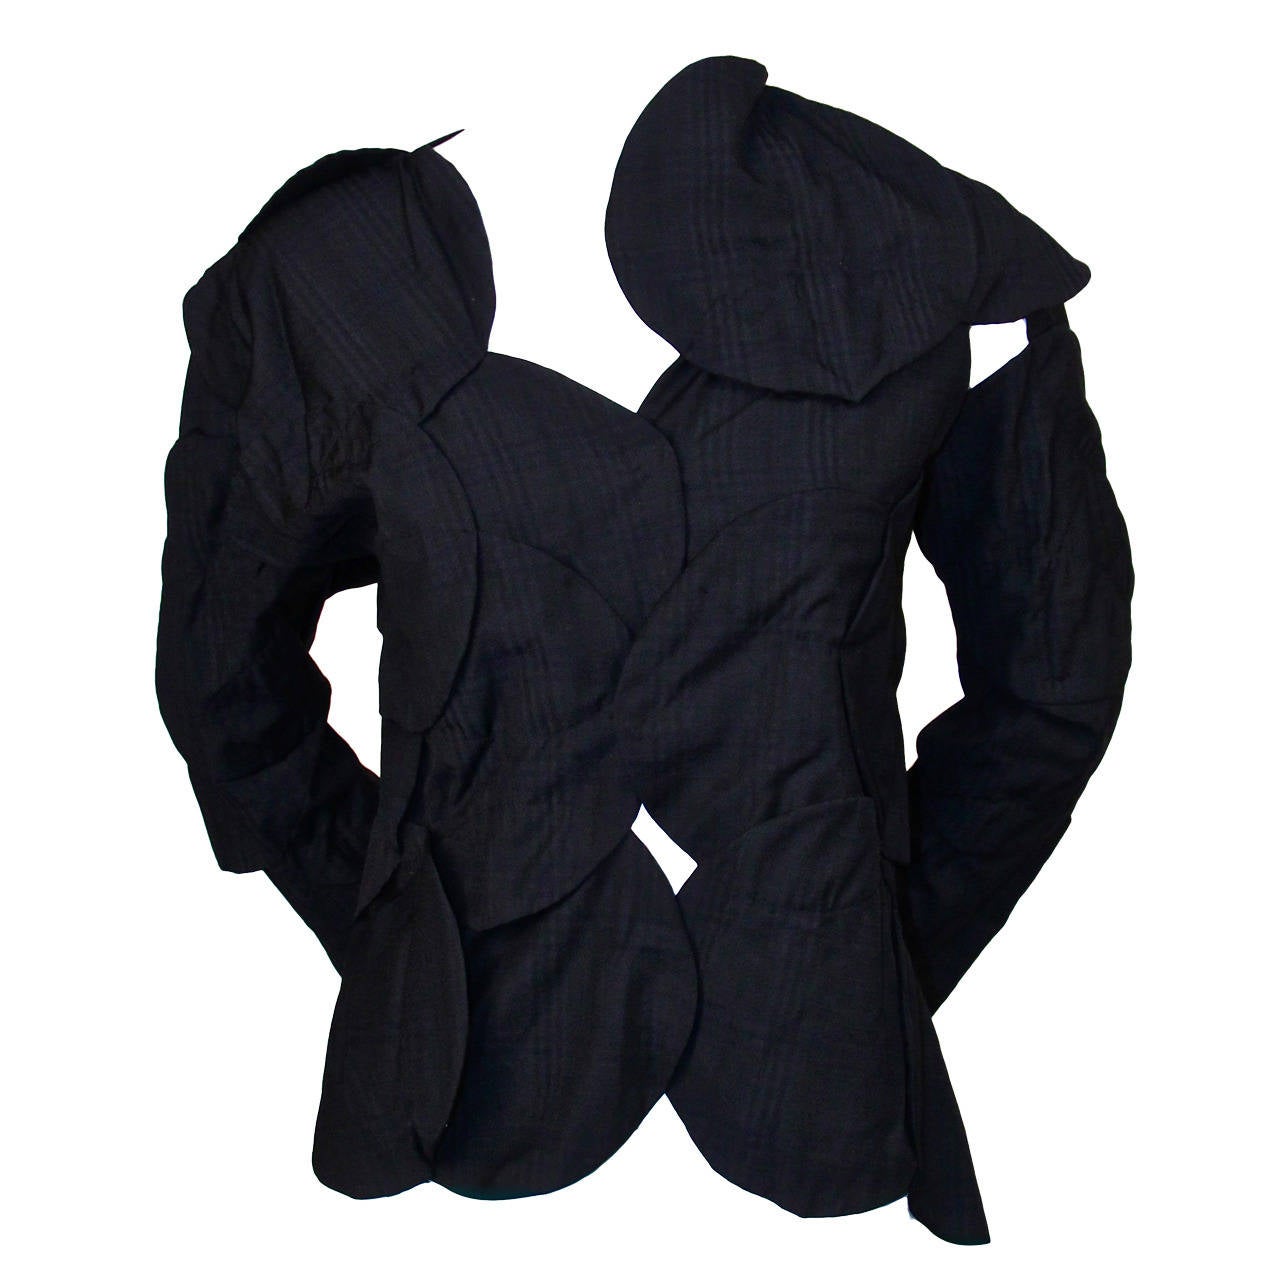 MARTIN MARGIELA black artisanal reconstructed circle jacket